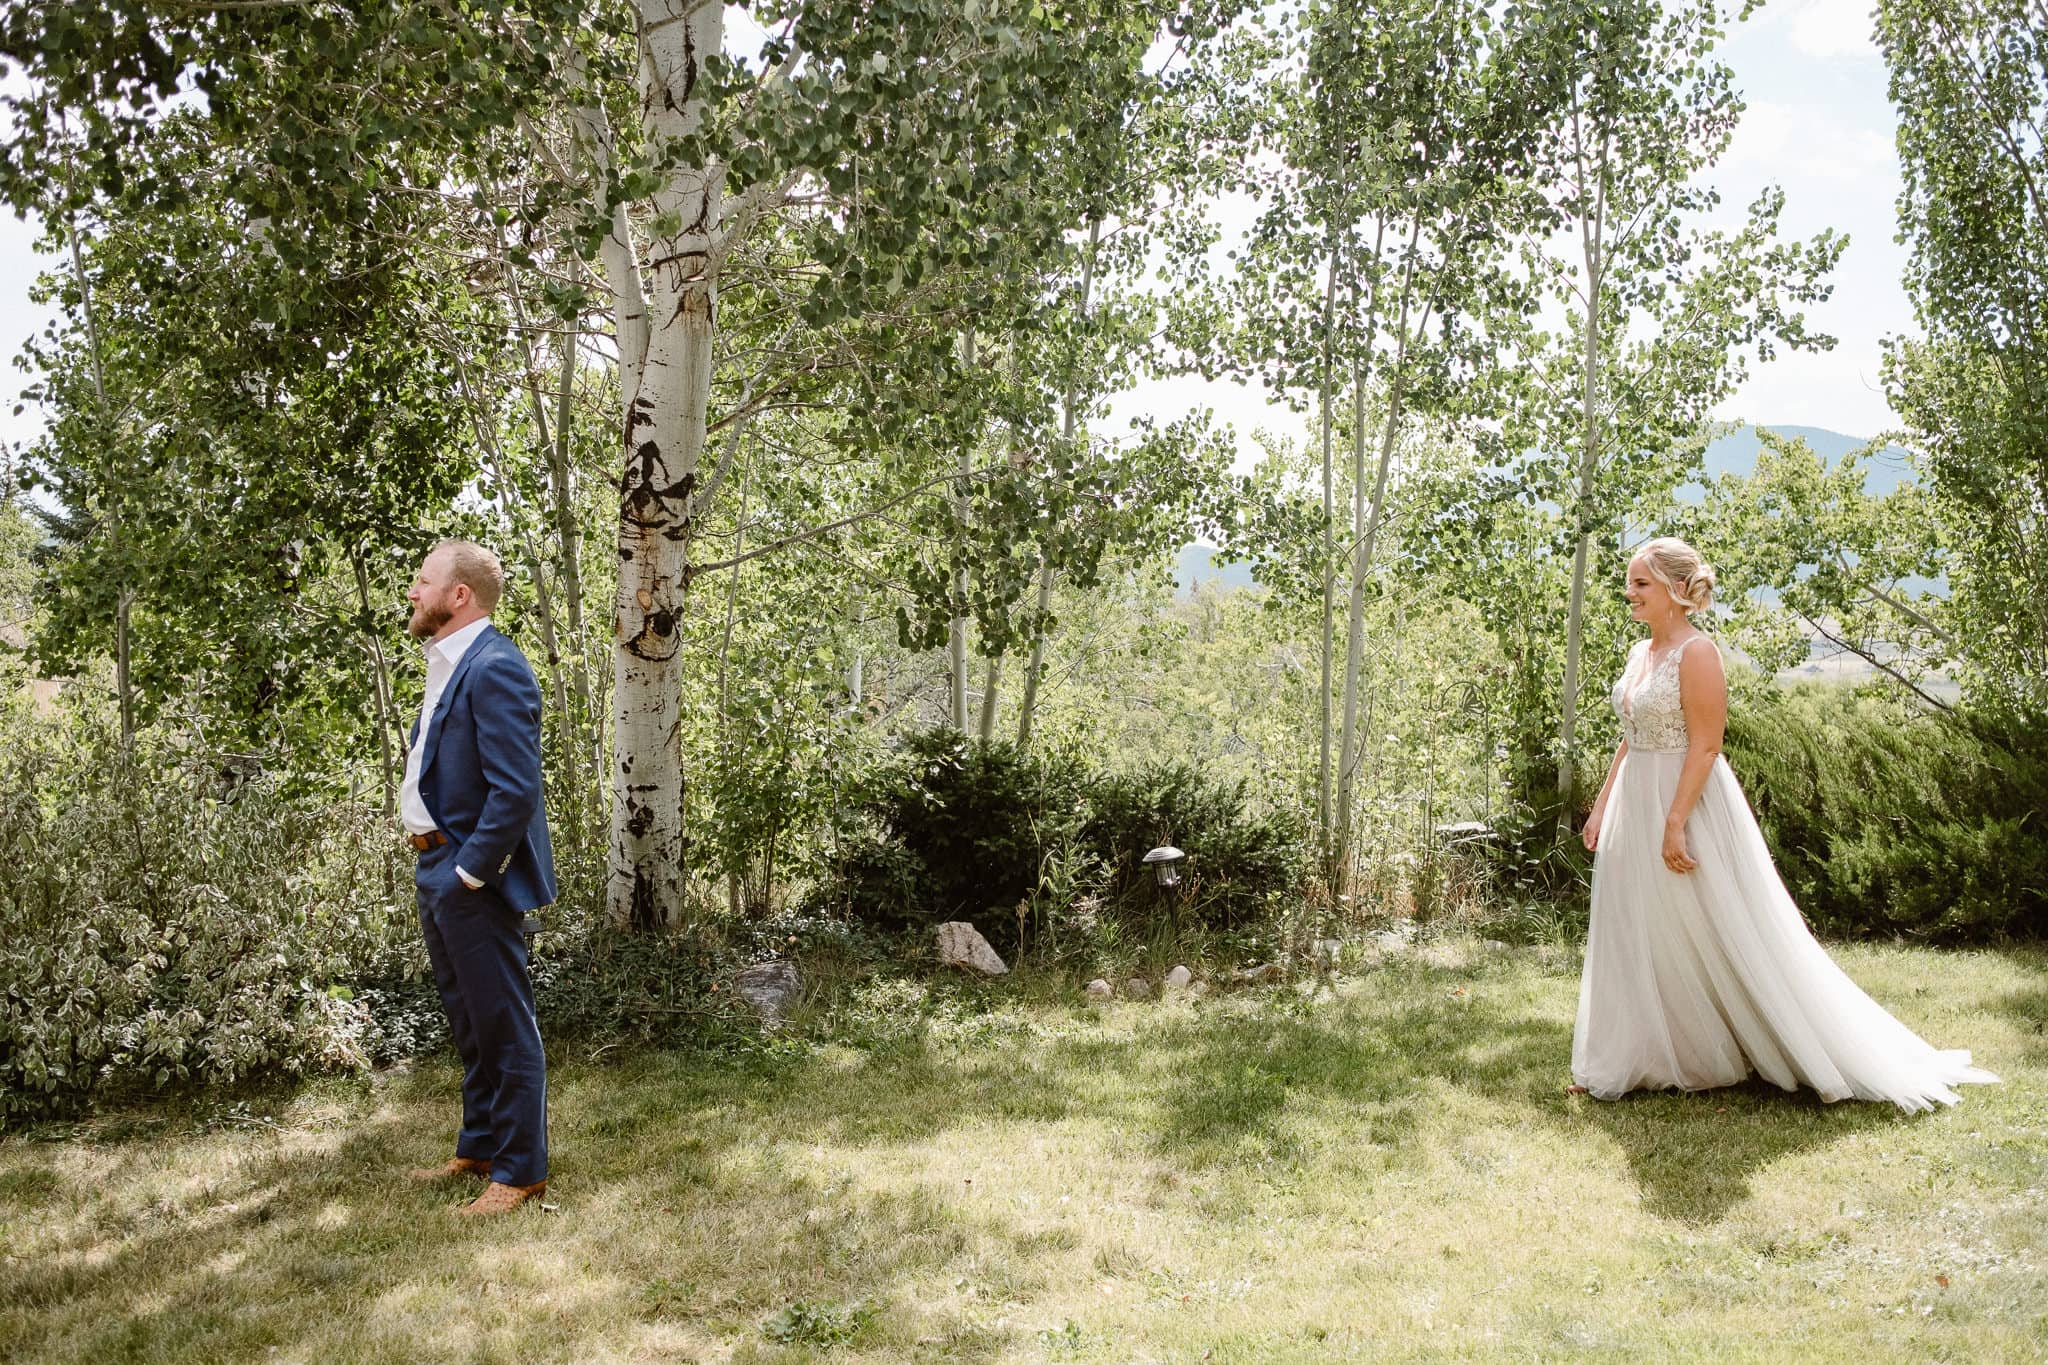 Steamboat Springs wedding photographer, La Joya Dulce wedding, Colorado ranch wedding venues, bride and groom first look, first look photos, wedding photographs